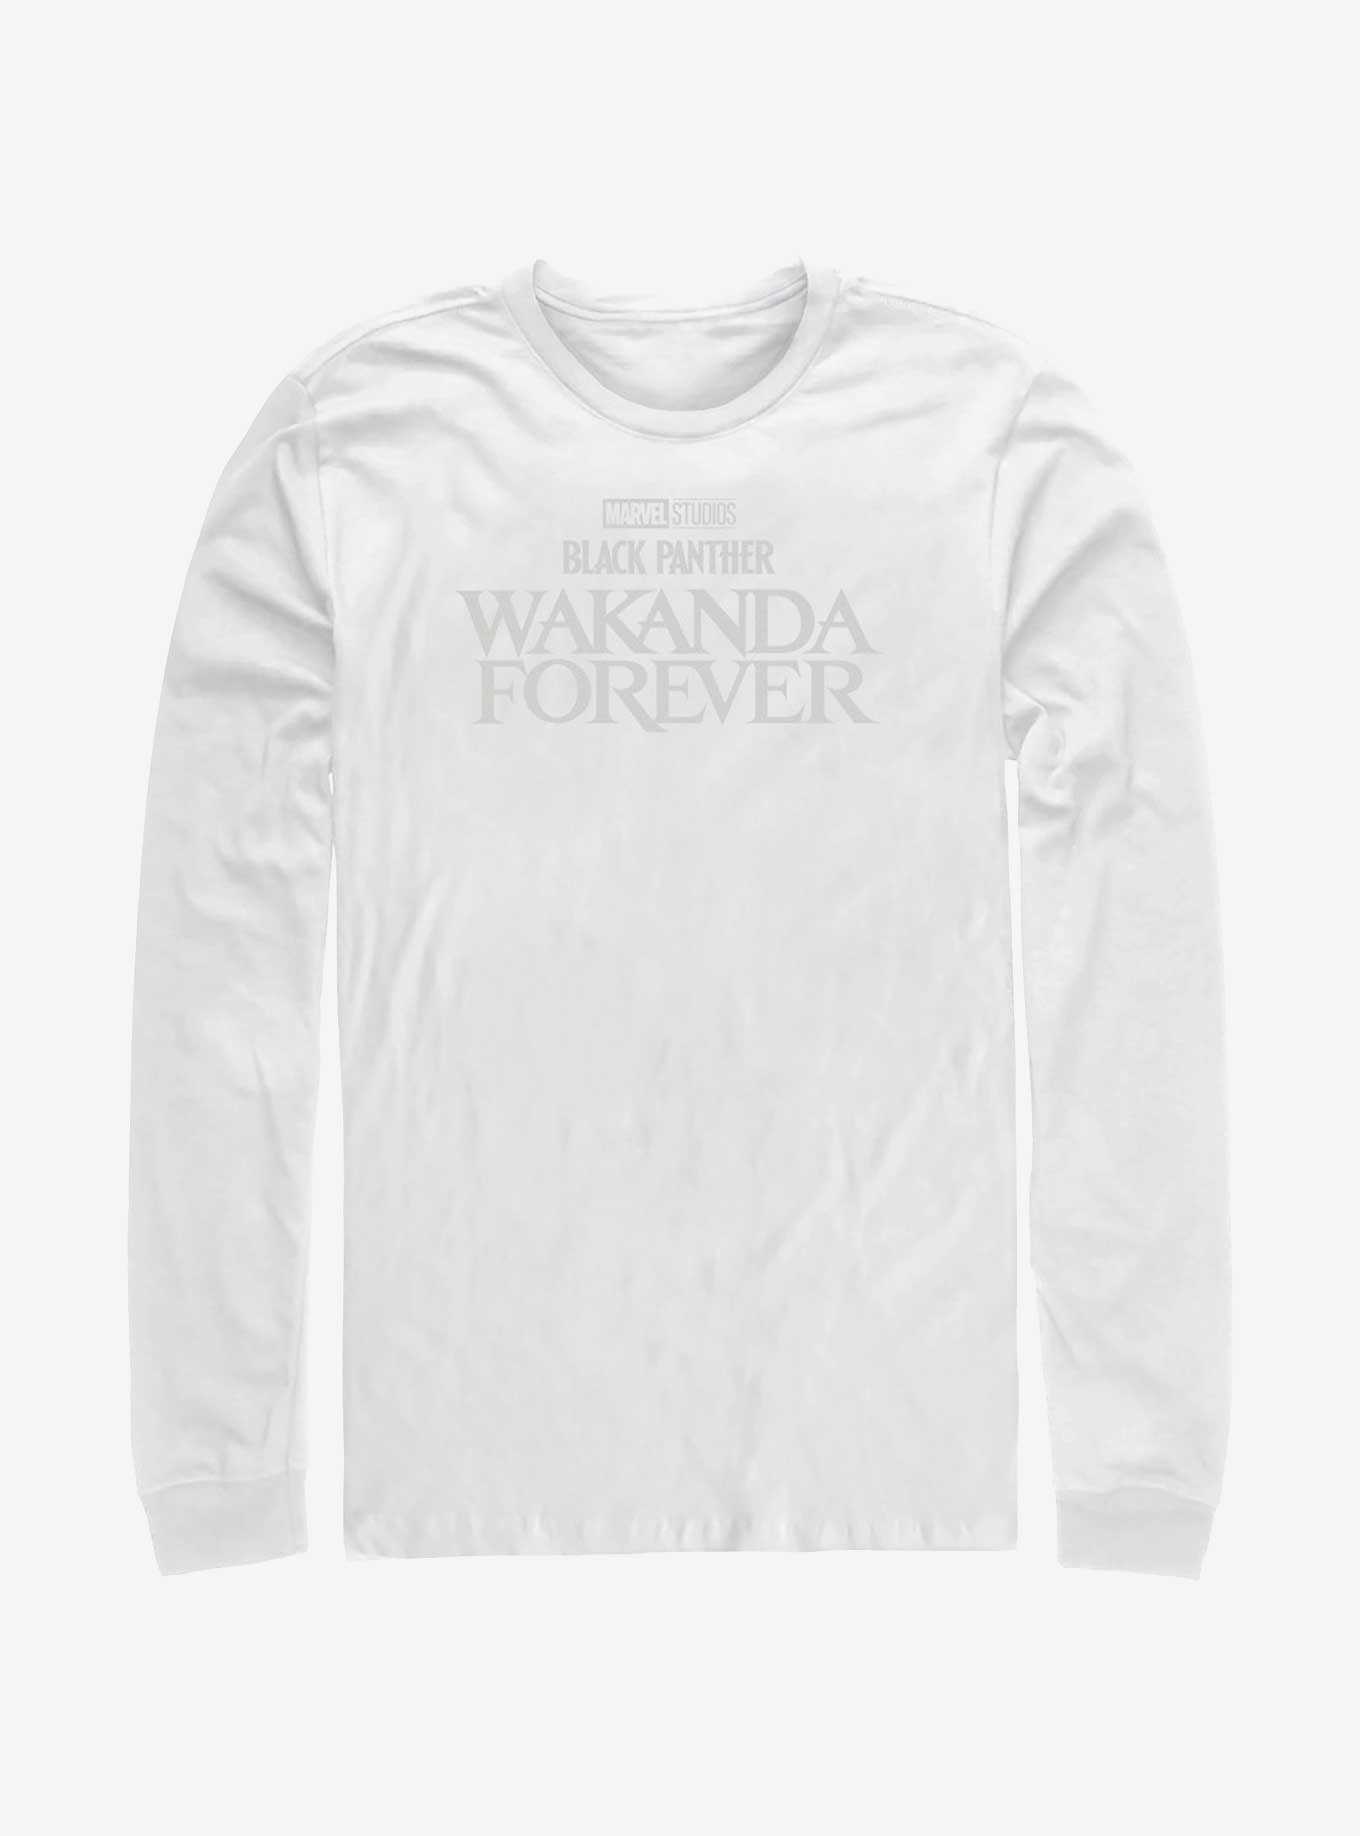 Black Panther 2: Wakanda Forever Shirts & Merch | Hot Topic | T-Shirts